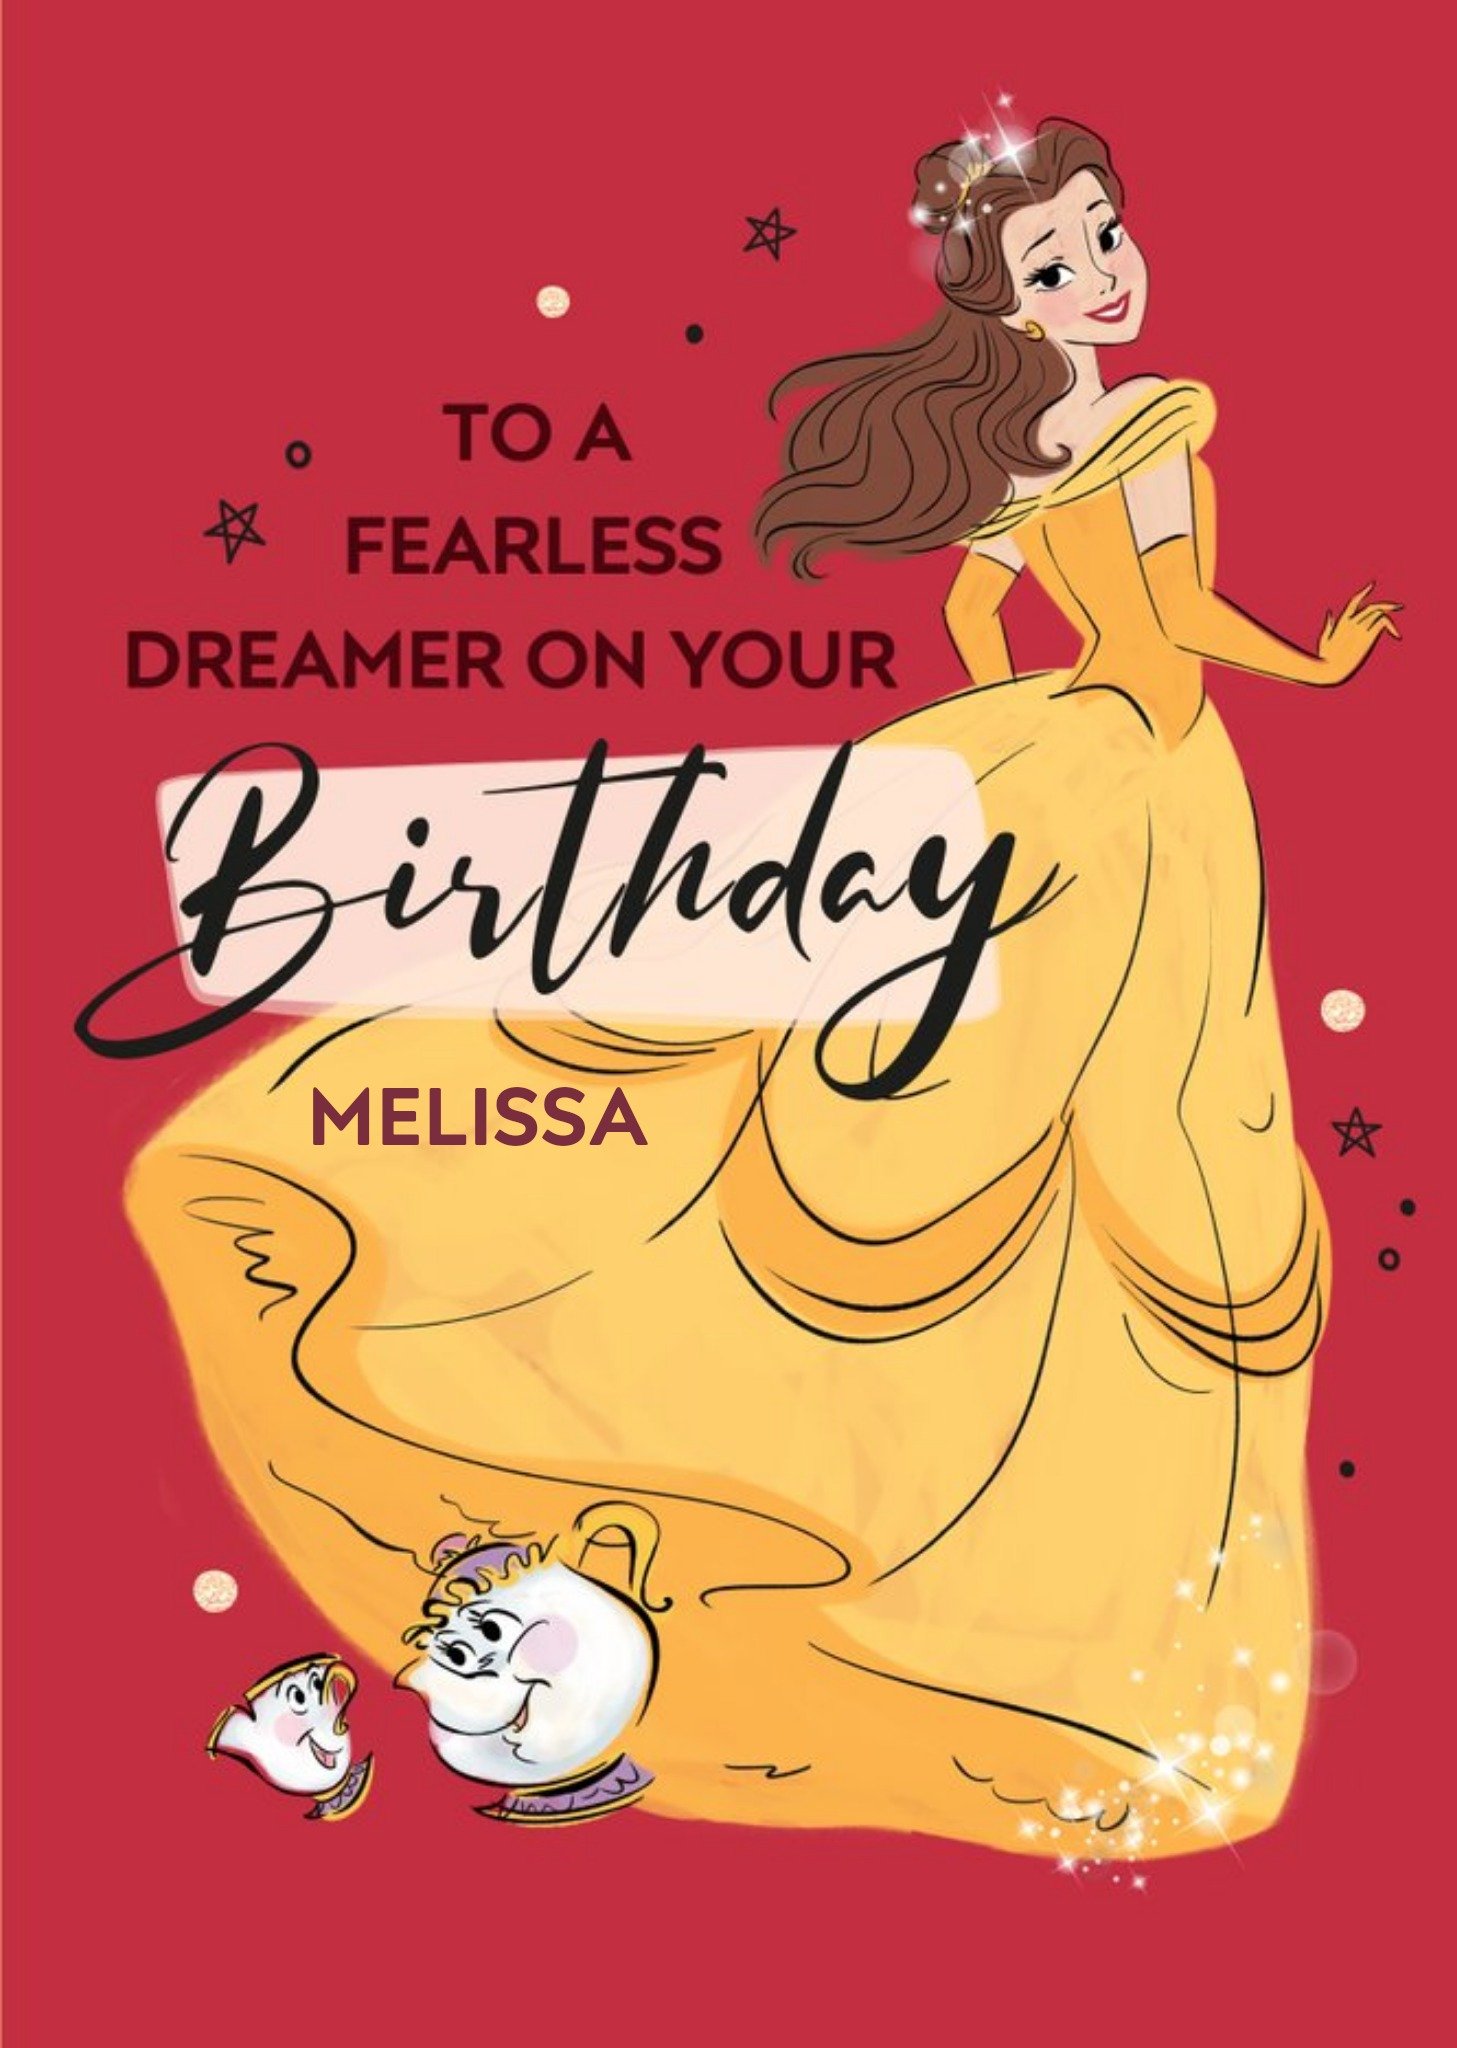 Disney Princesses Disney Princess Belle Fearless Dreamer Birthday Card Ecard